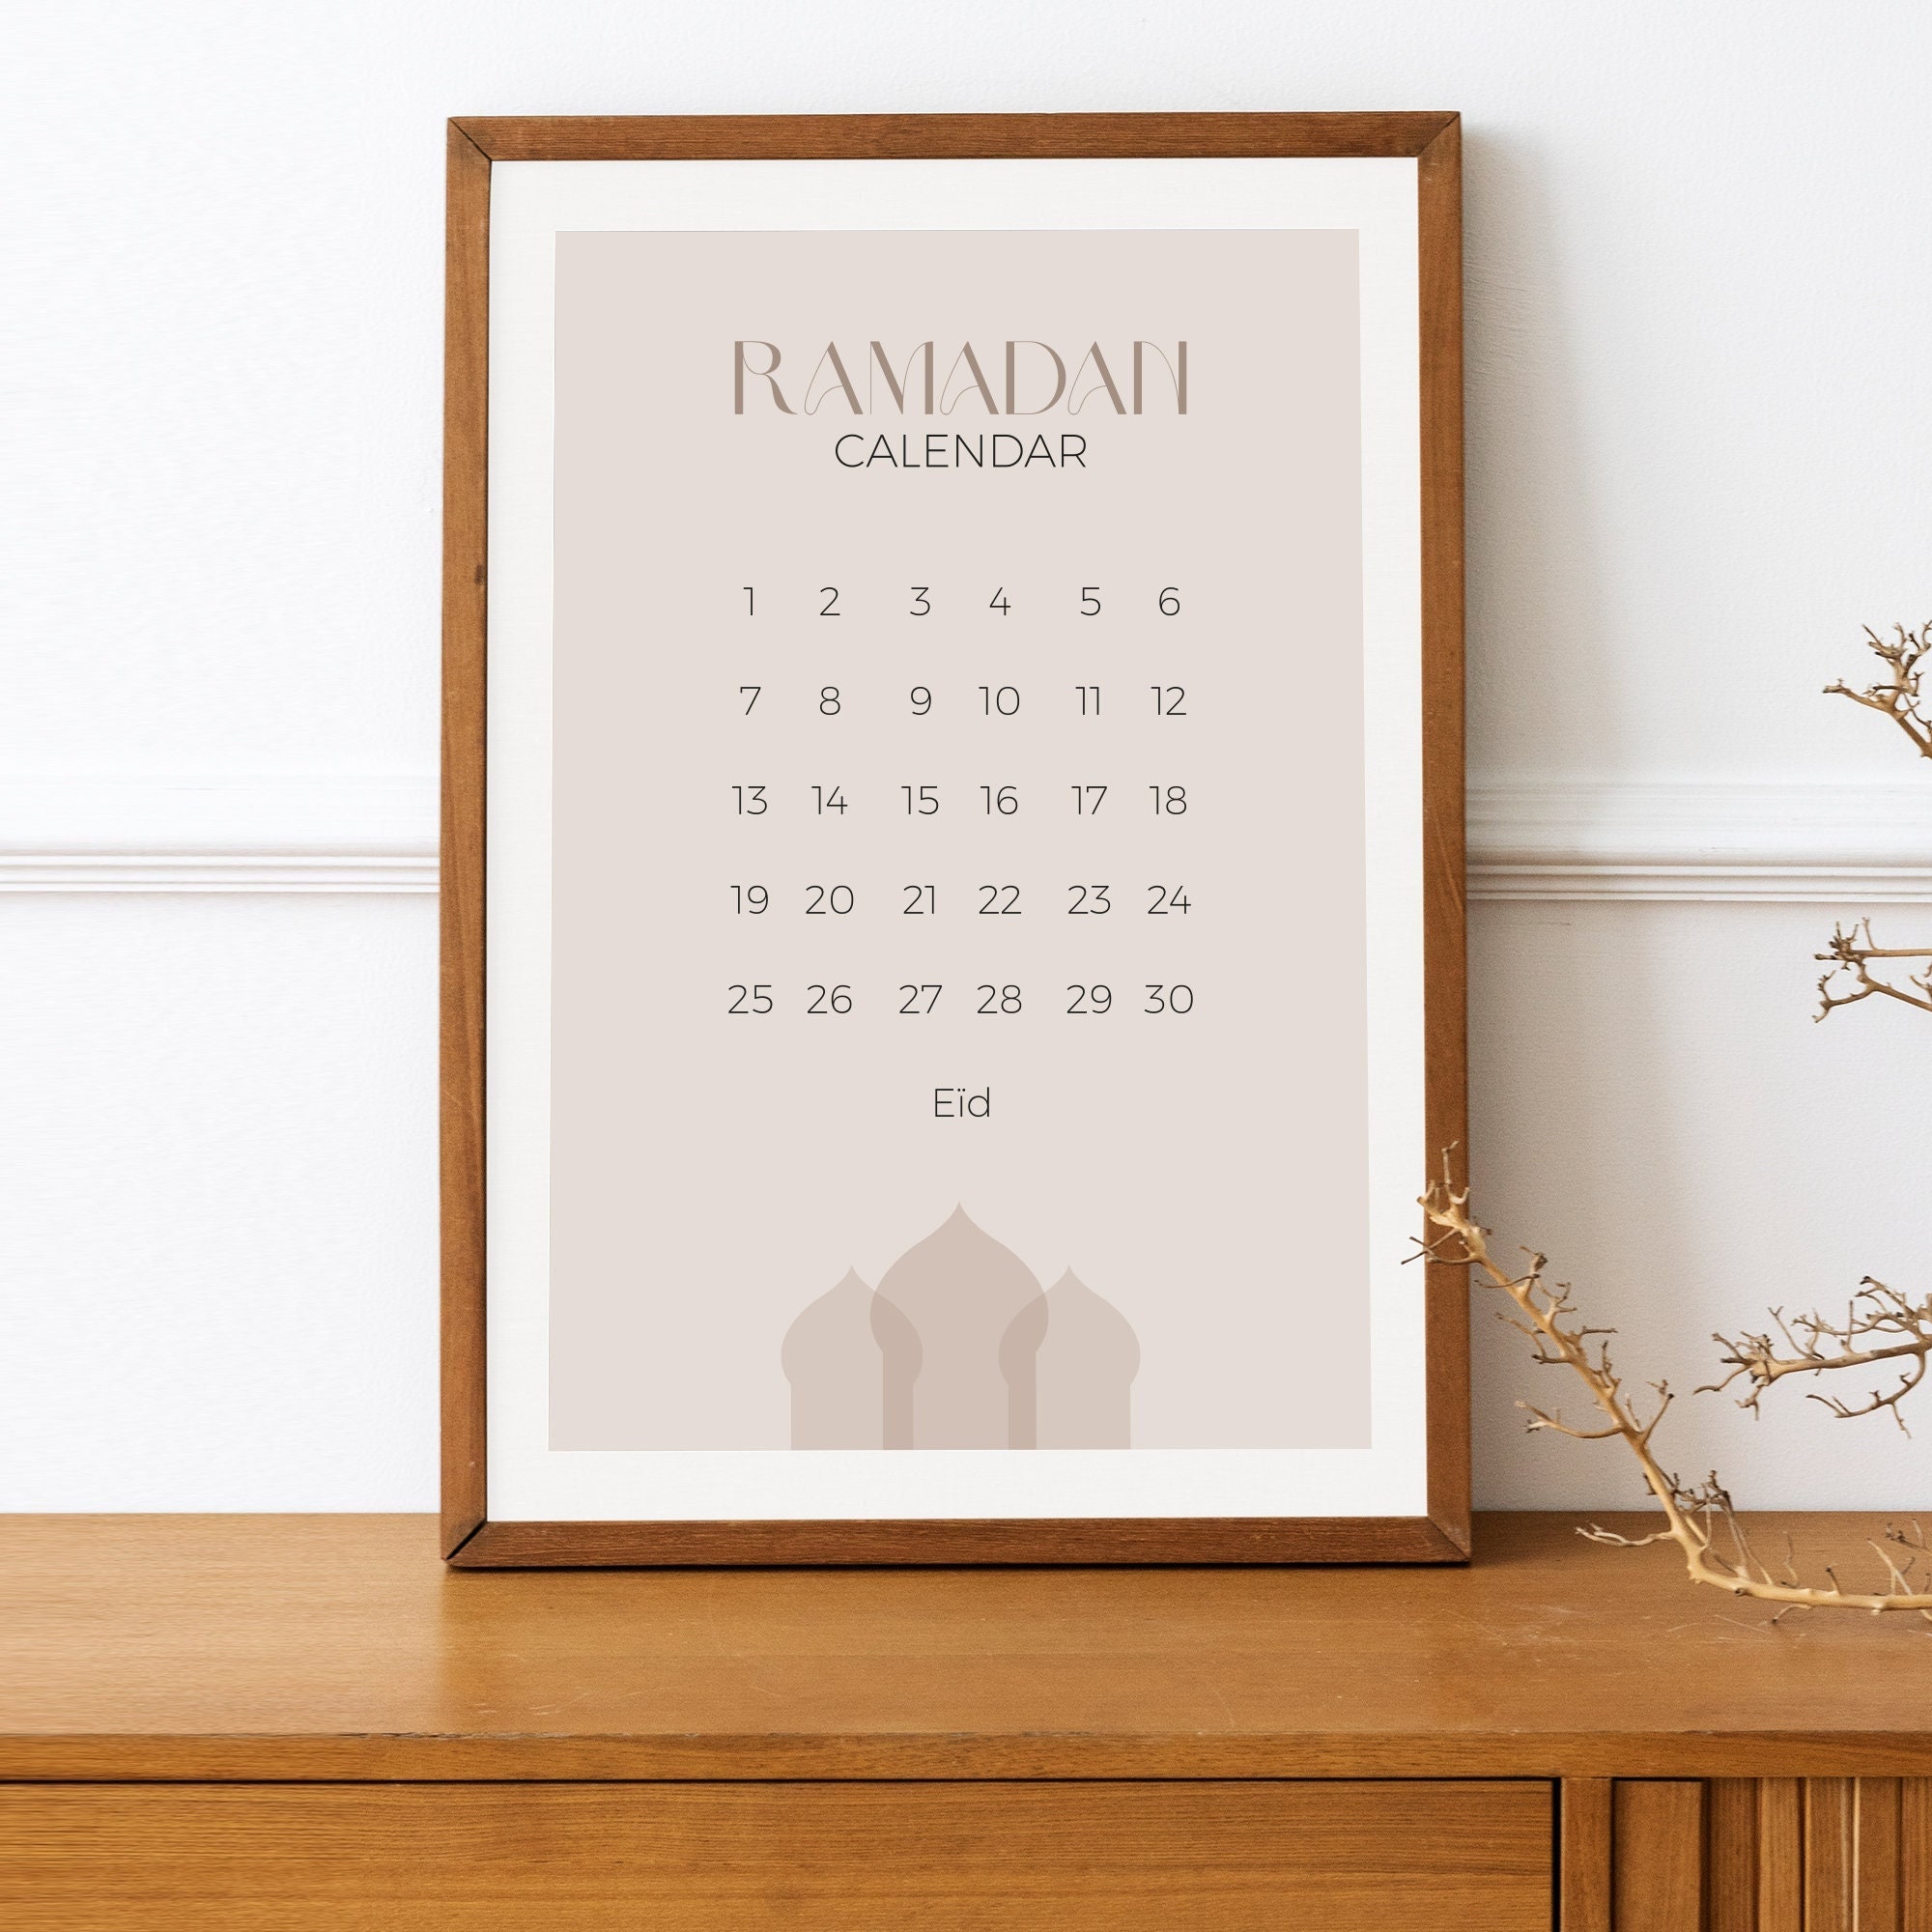 Ulikey Calendrier de lAvent Ramadan, Calendrier Ramadan DIY avec 30